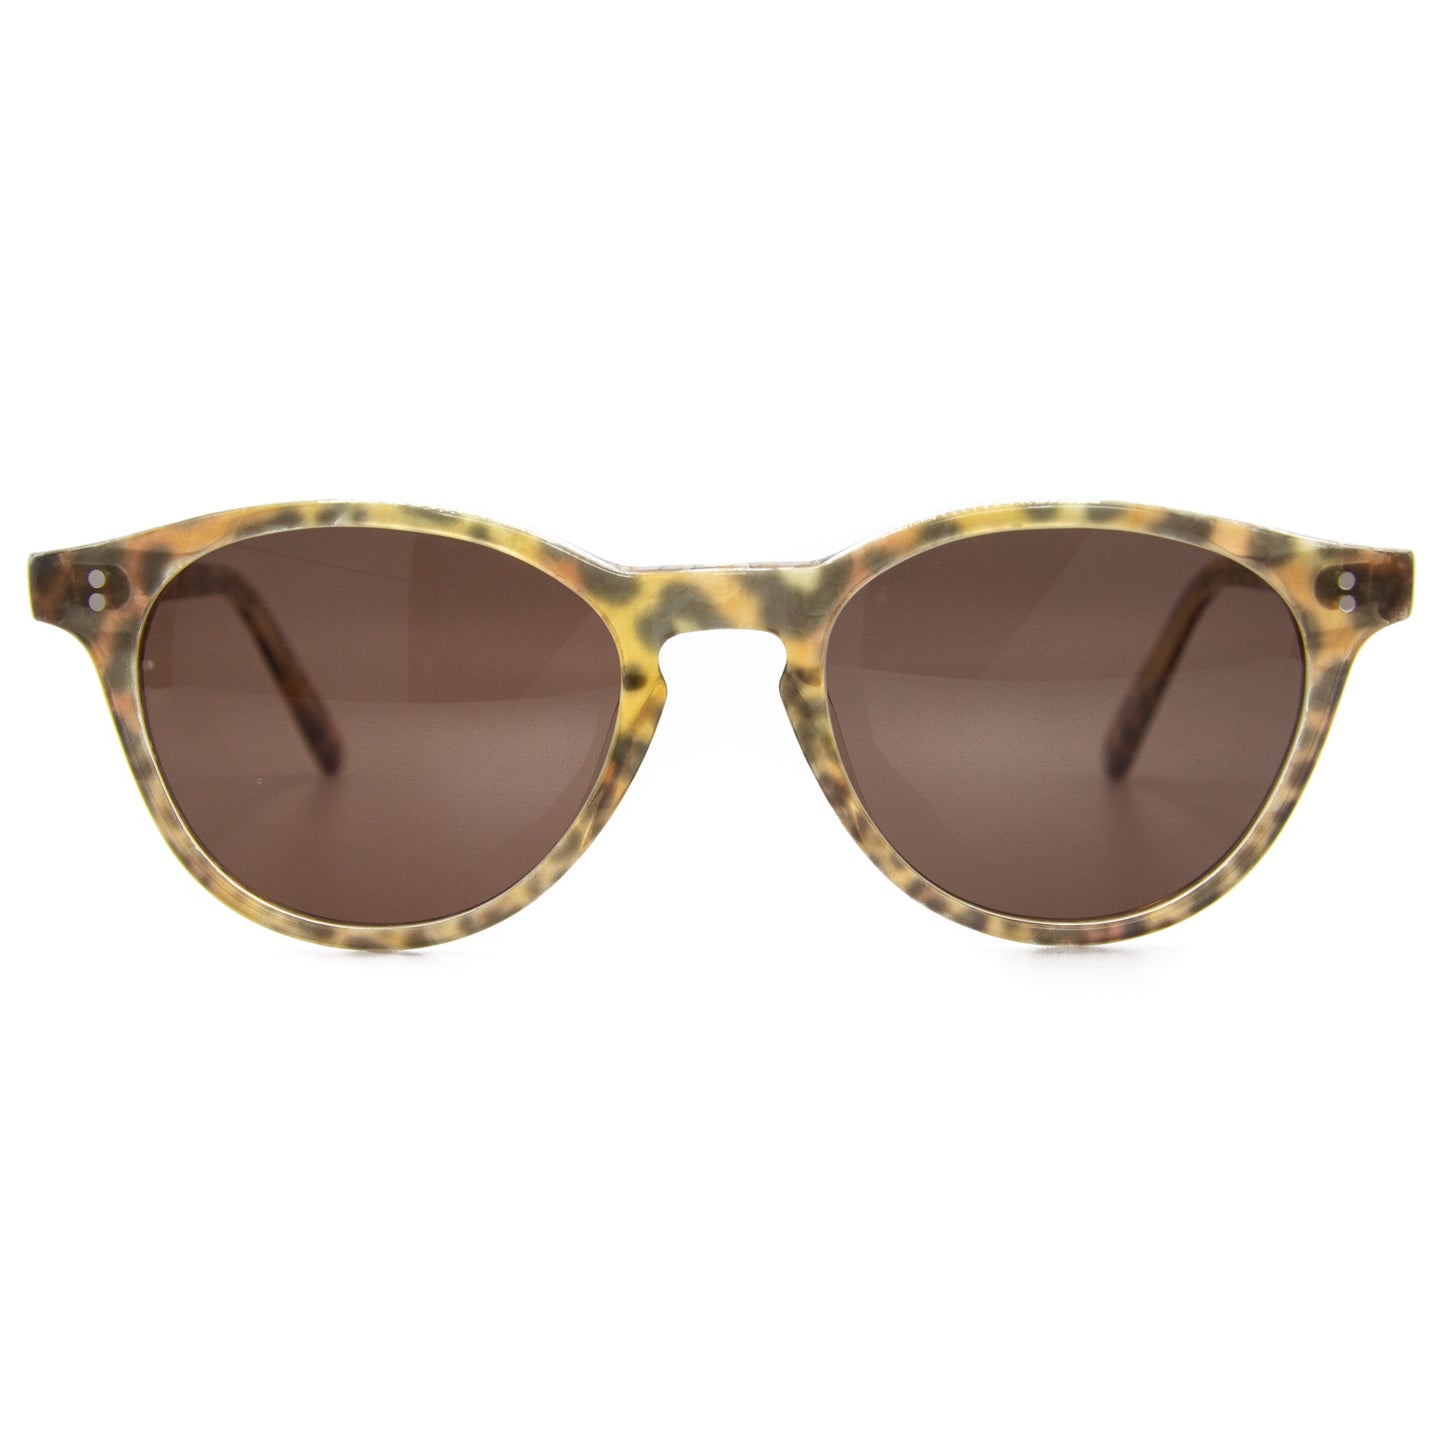 3 brothers - Chantal - Leopard - Prescription Sunglasses